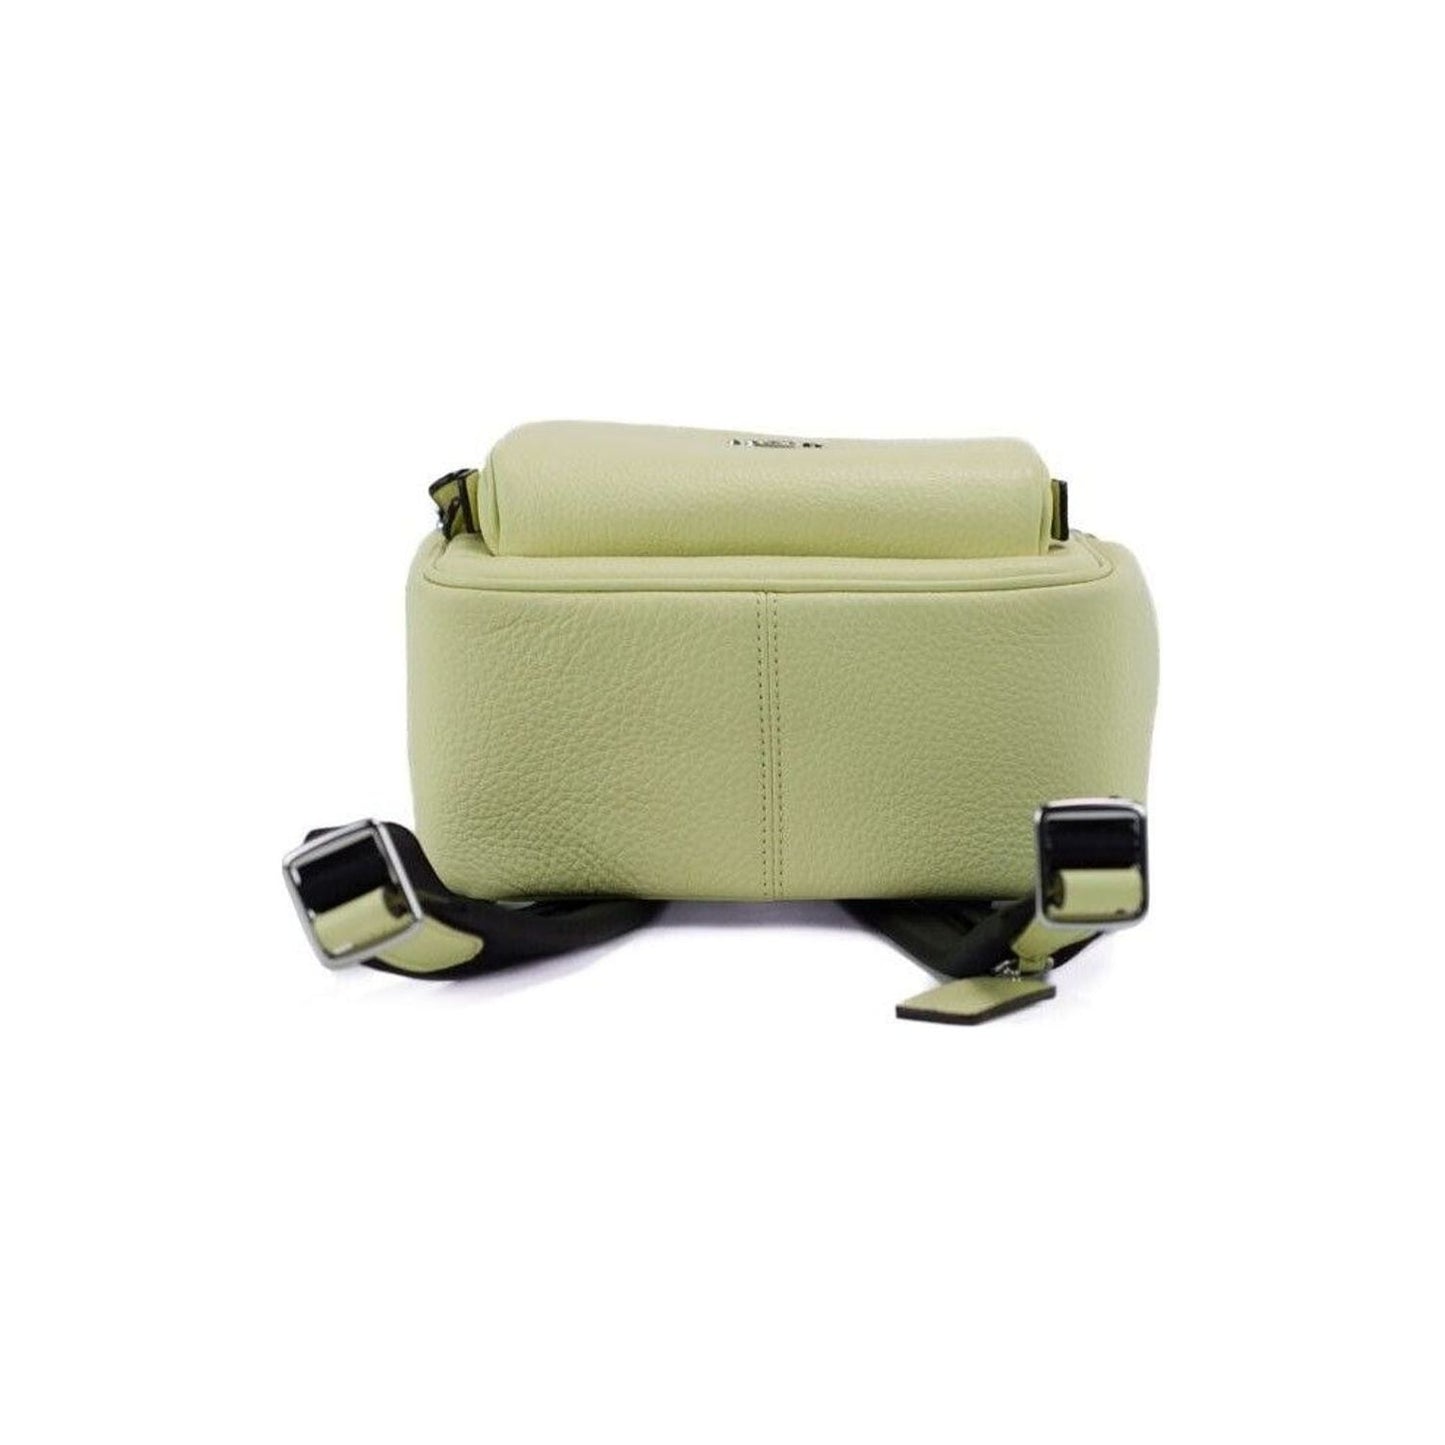 COACH Mini Court Pale Lime Pebbled Leather Shoulder Backpack Bag mini-court-pale-lime-pebbled-leather-shoulder-backpack-bag